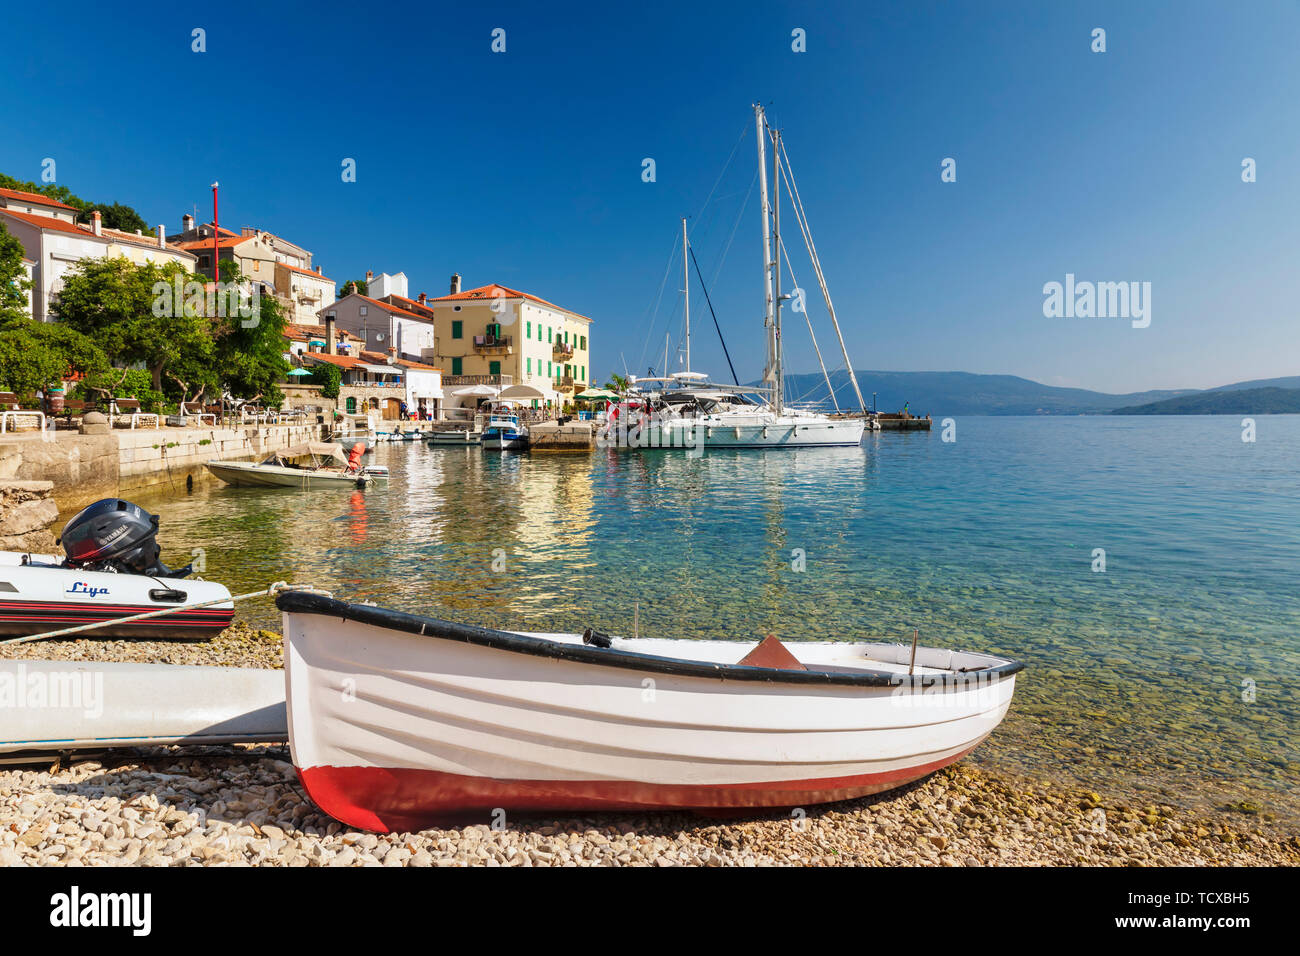 Fishing boats at the port, Valun, Cres Island, Kvarner Gulf, Croatia, Europe Stock Photo